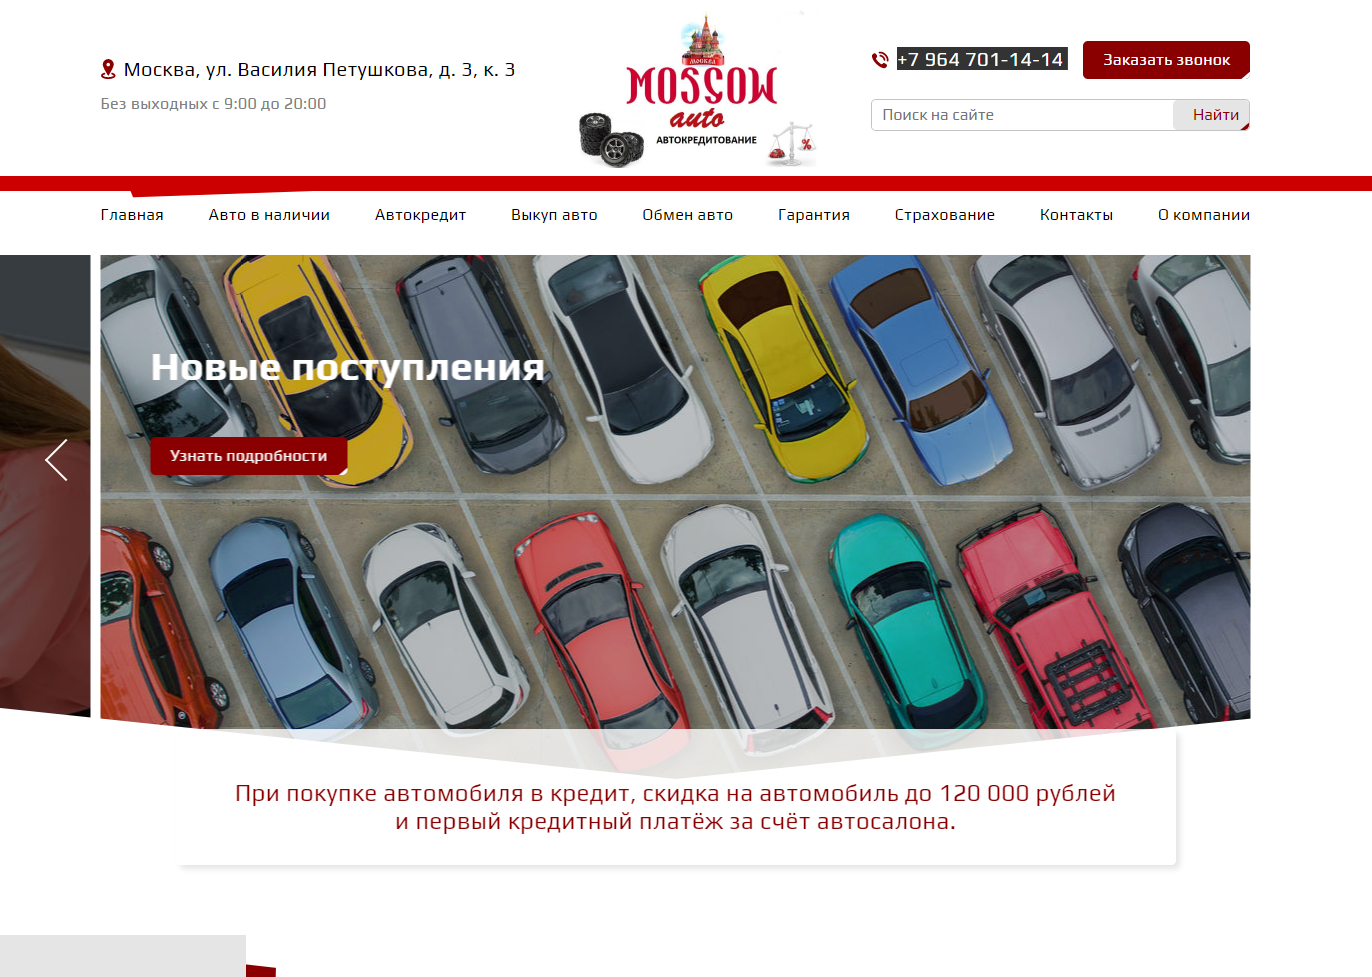 Изображение сайта автосалона Moscow Auto на странице с отзывами